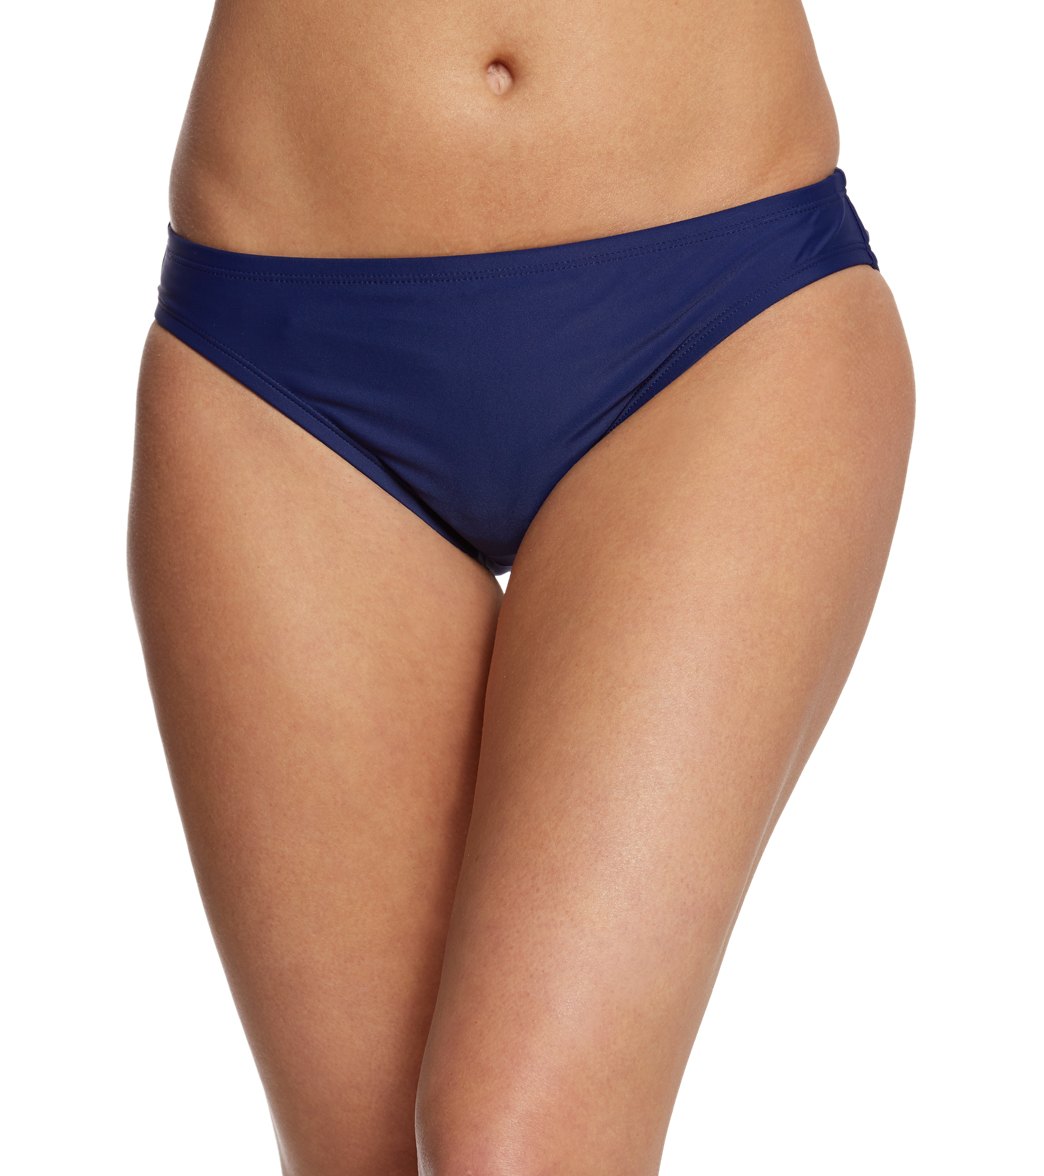 Adidas Women's Solid Start Hipster Bikini Bottom - Mystery Blue Xl Nylon/Spandex - Swimoutlet.com